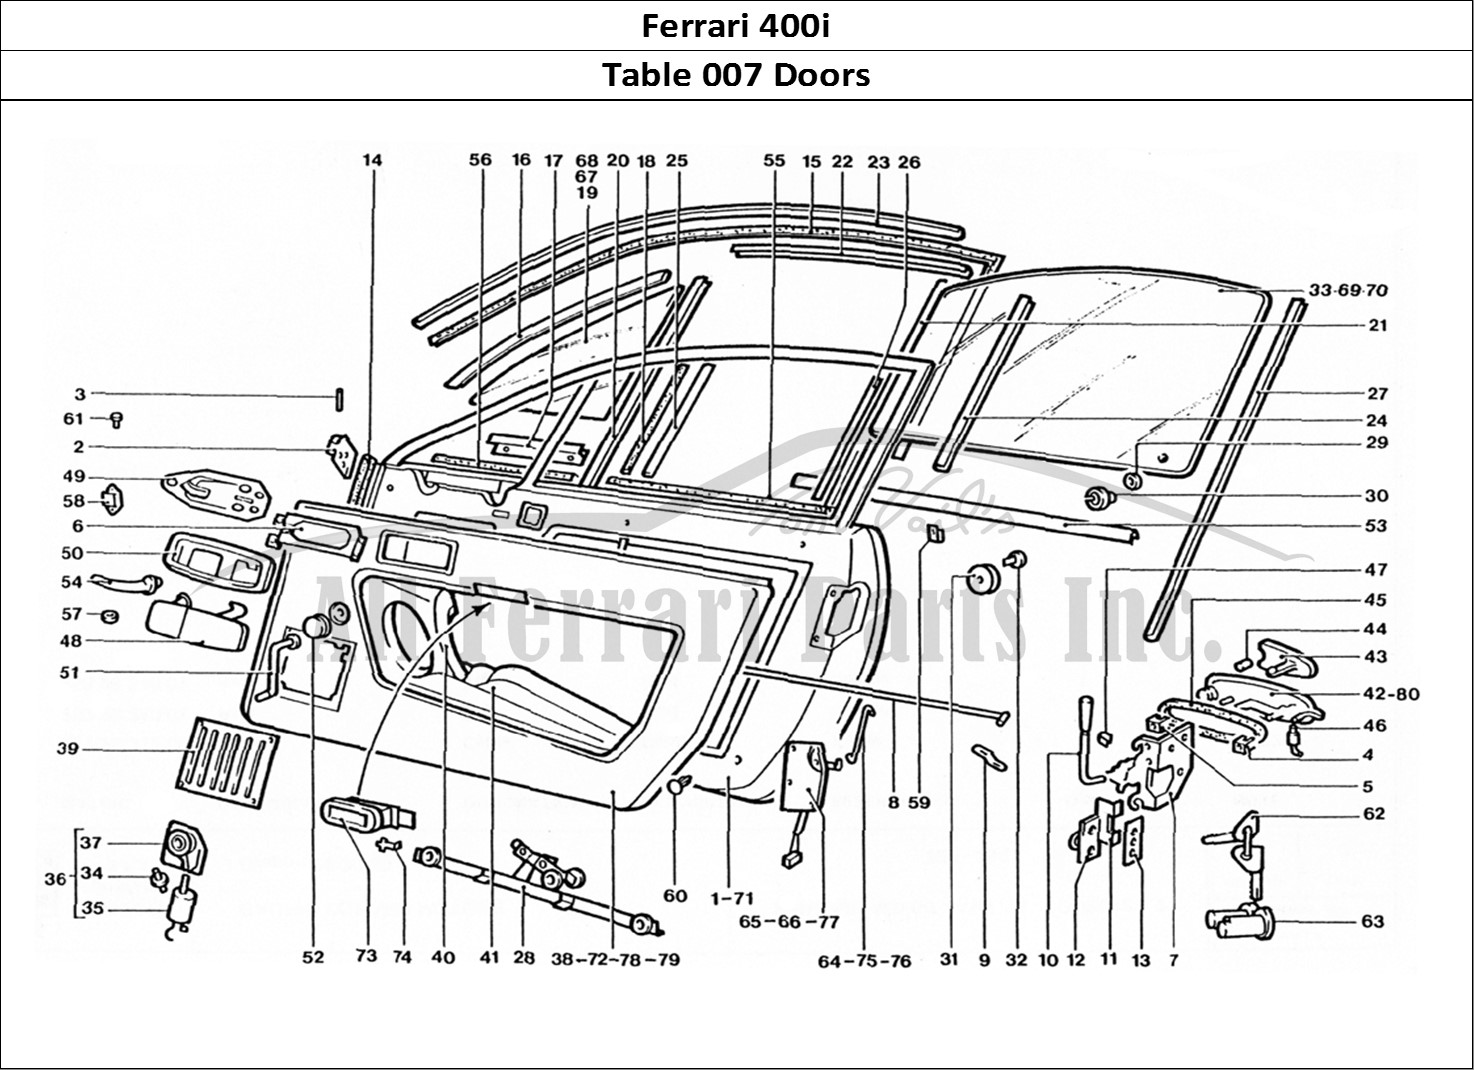 Ferrari Parts Ferrari 400 GT (Coachwork) Page 007 Doors